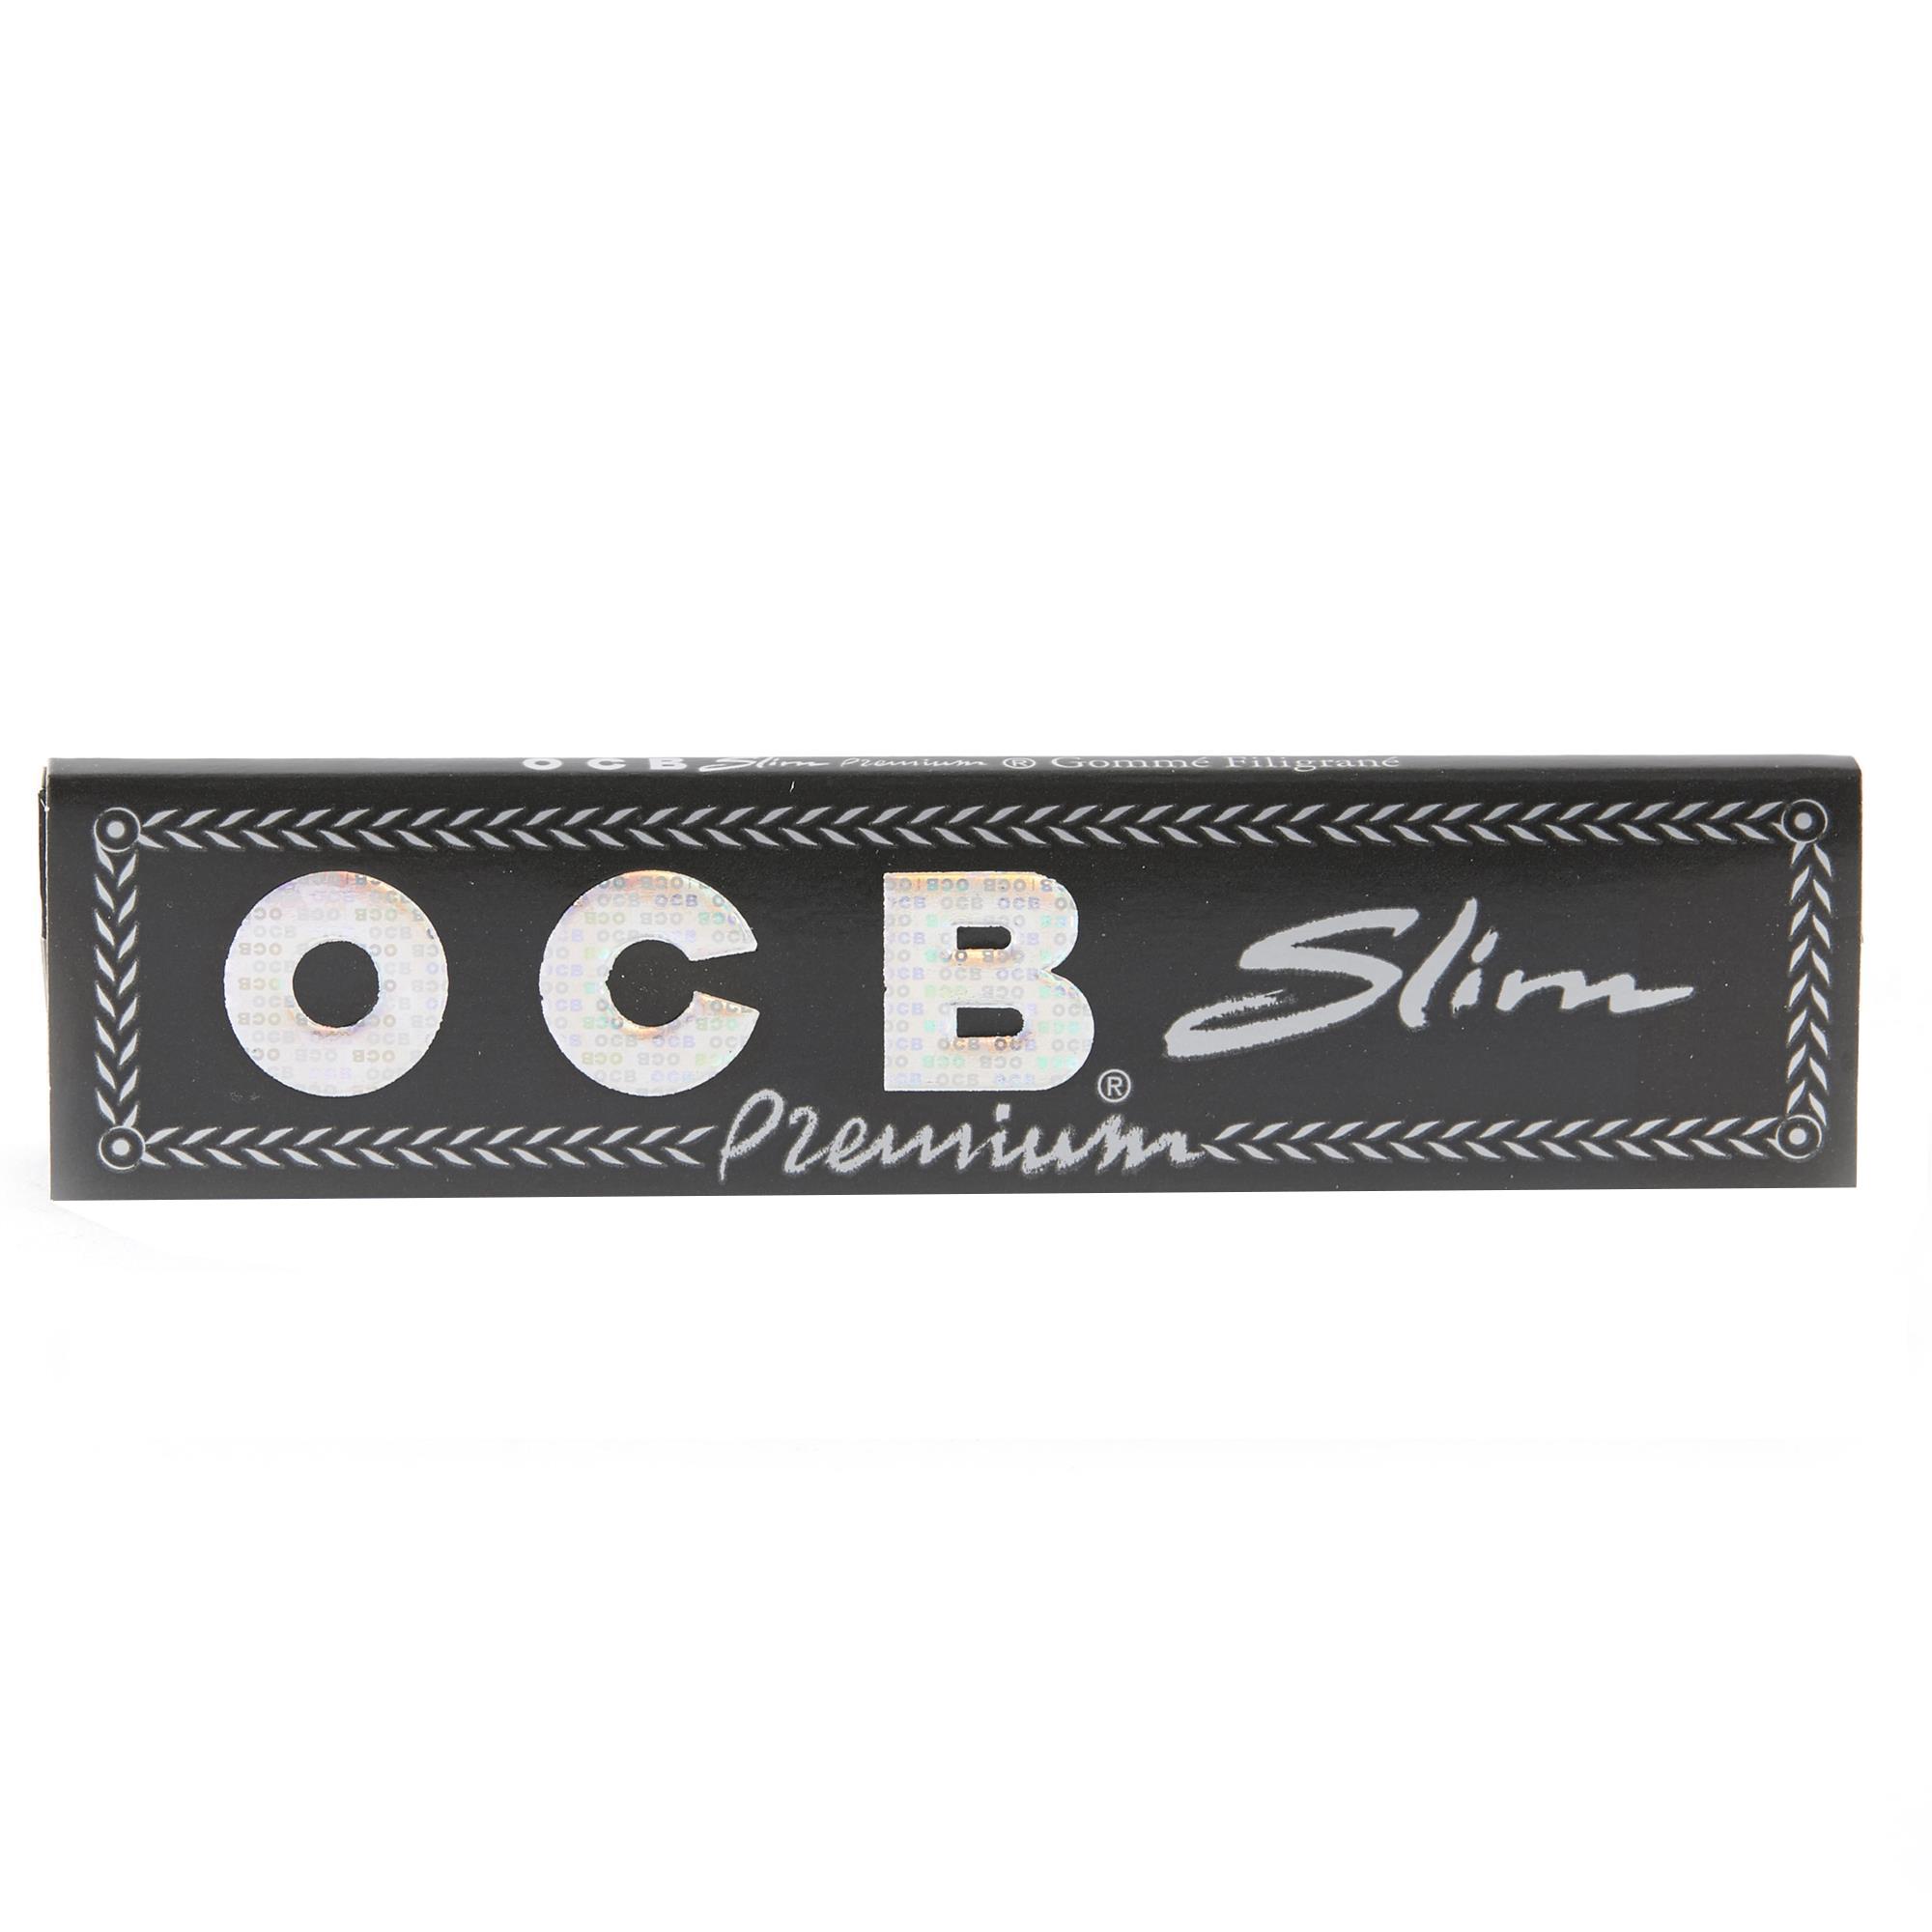 Ocb Premium Black Ks Slim Rolling Papers & Supplies | GoSensi